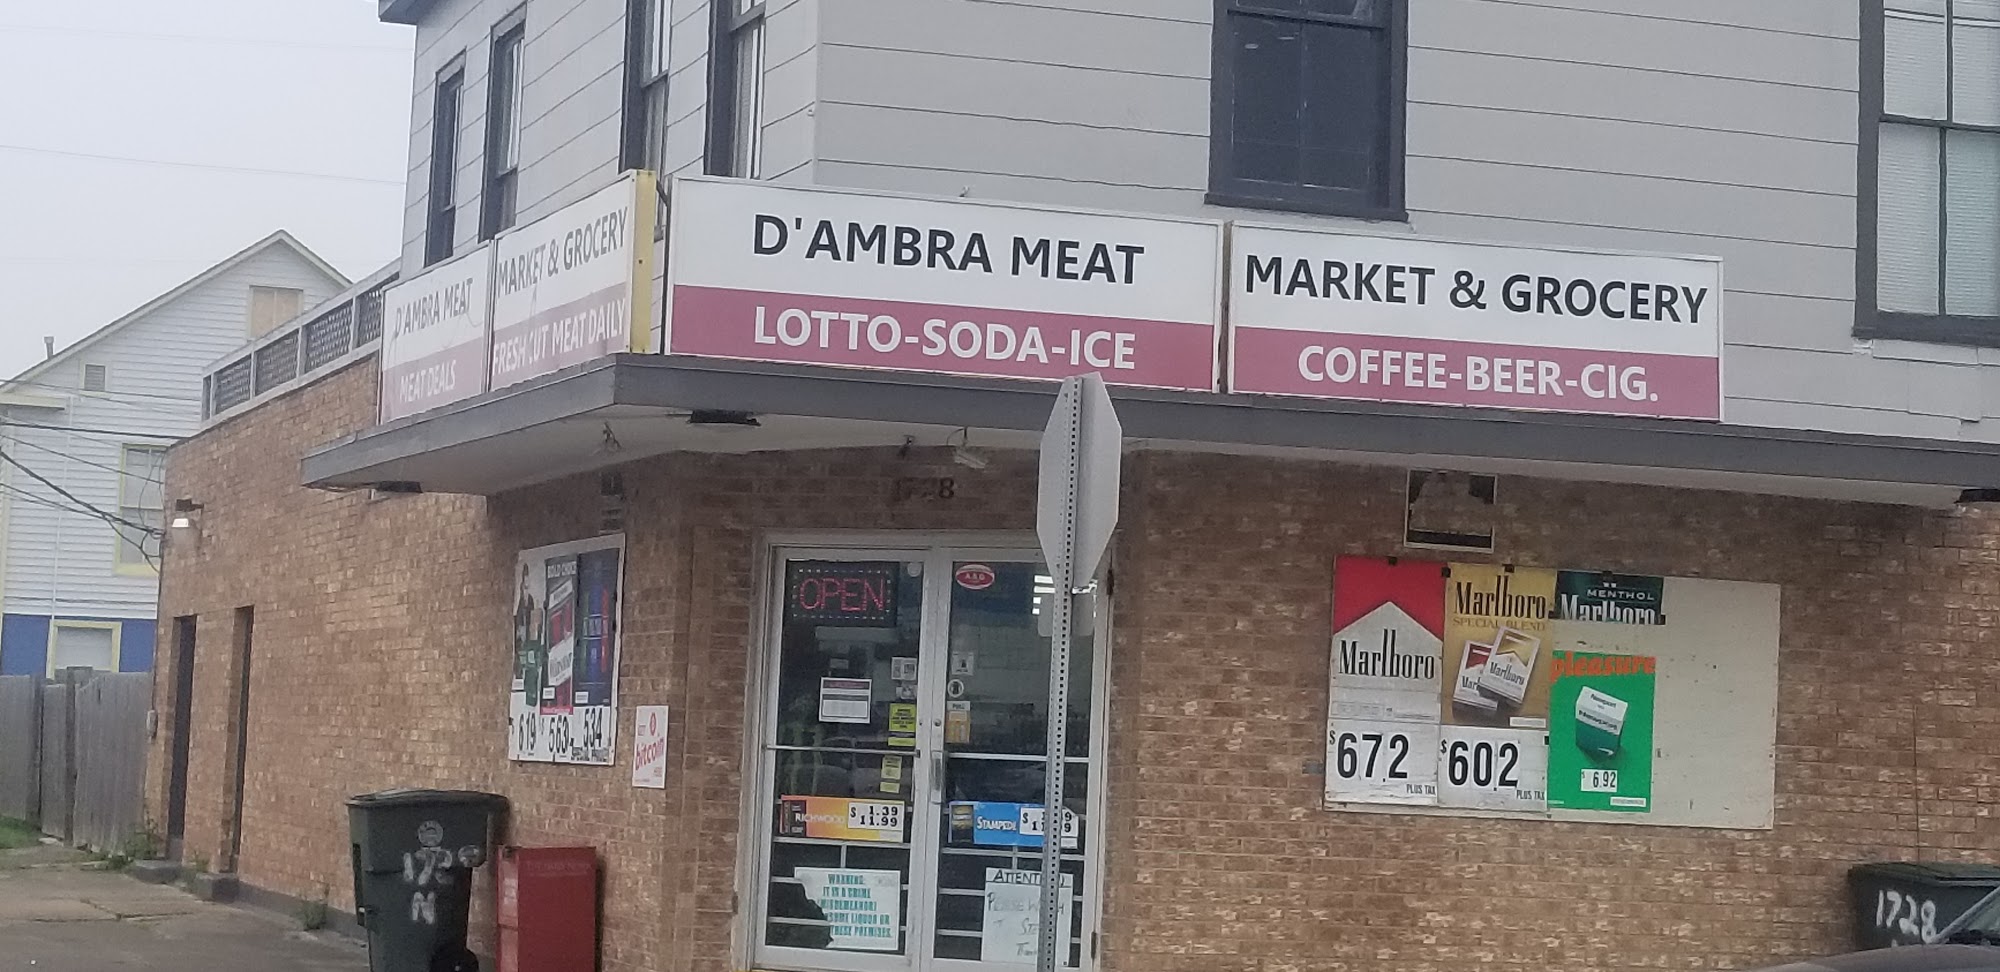 D'Ambra Meat Market & Grocery